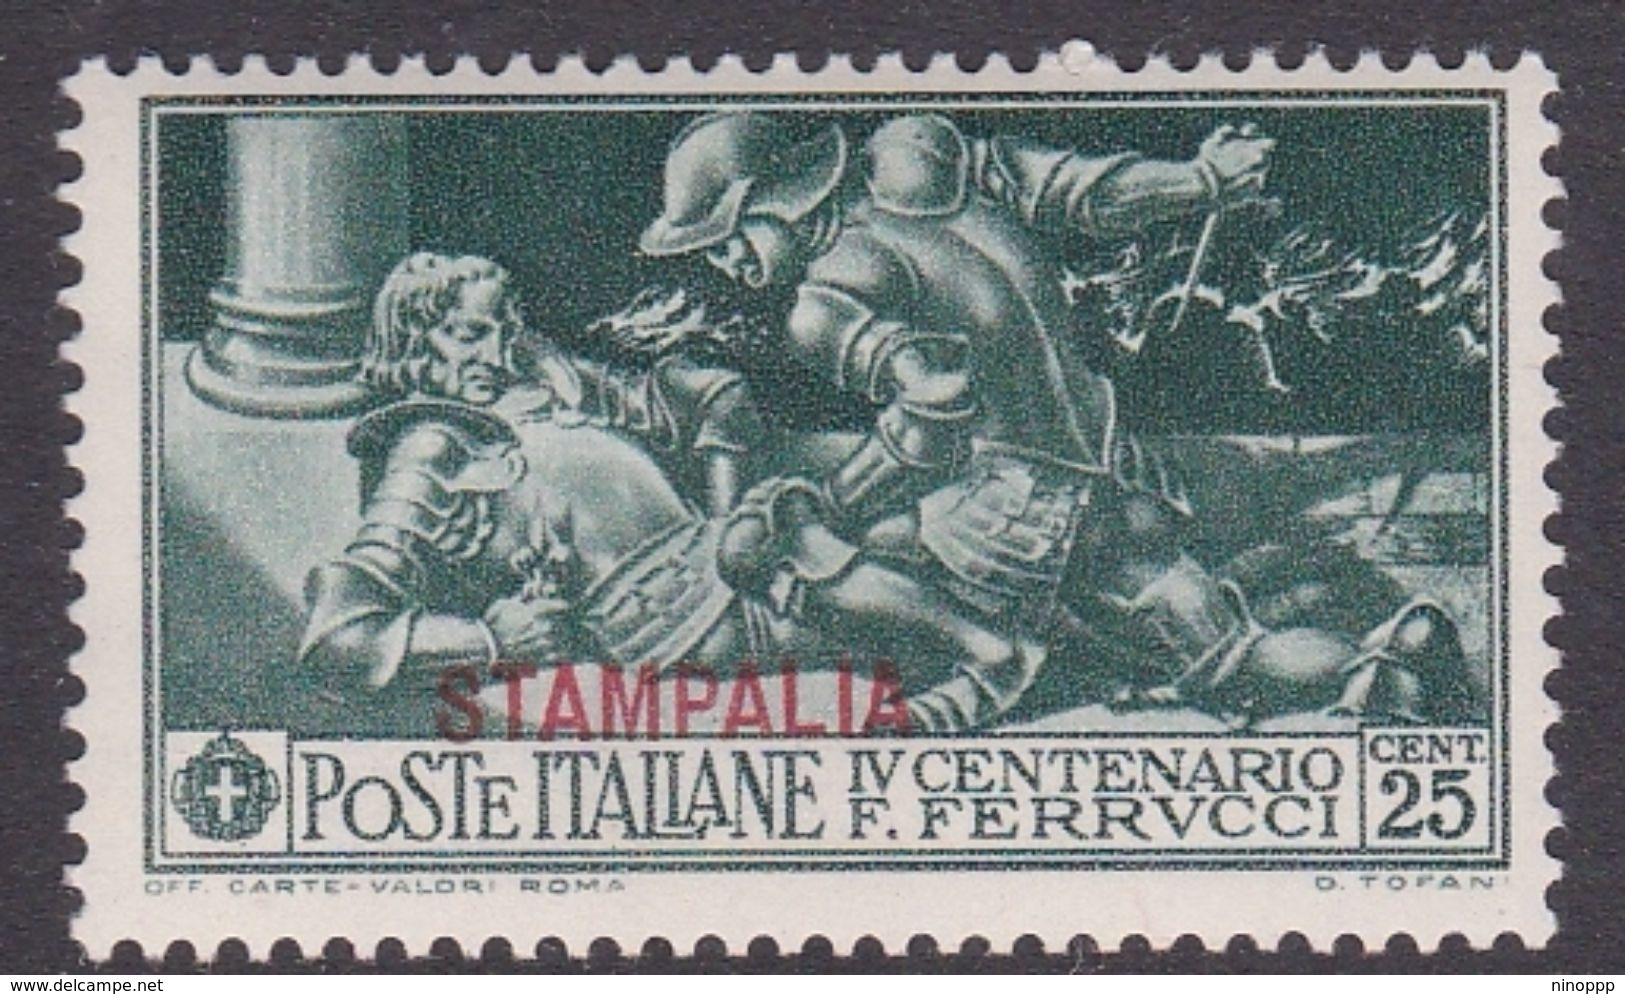 Italy-Colonies And Territories-Aegean-Stampalia S13 1930 Ferrucci 25c Green MH - Egée (Stampalia)